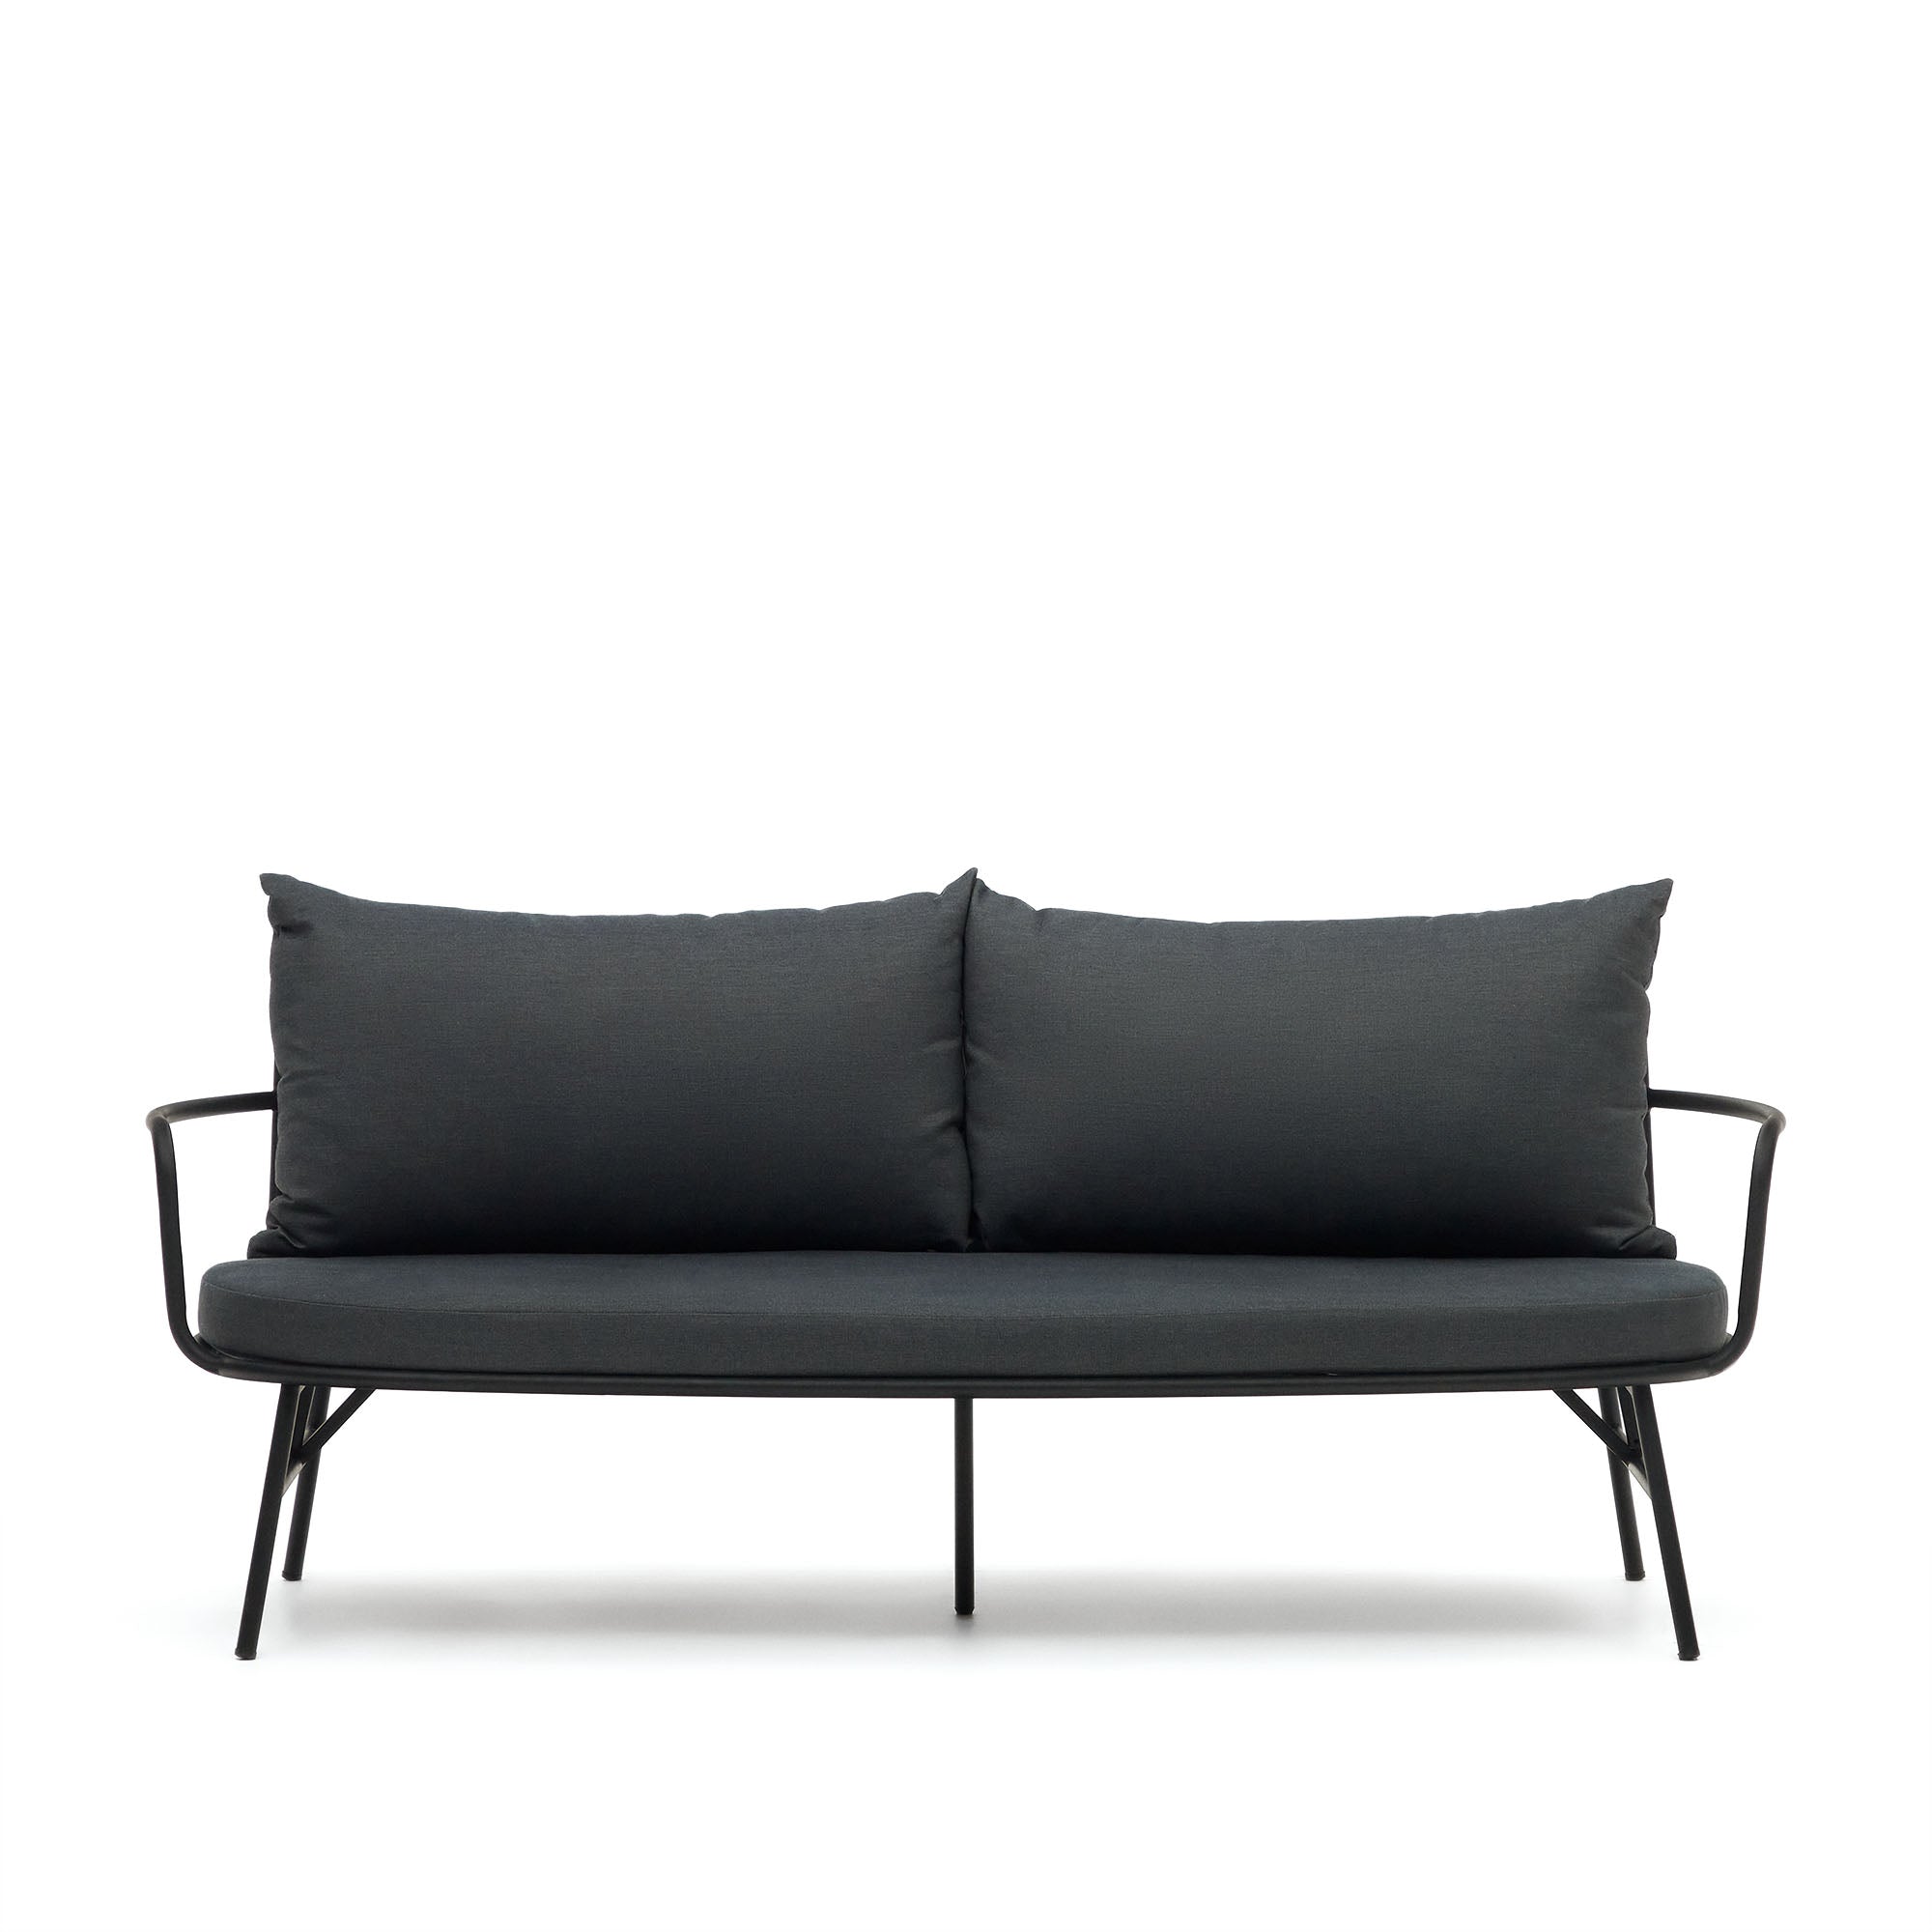 Bramant steel 2 seater sofa with black finish, 175.5 cm